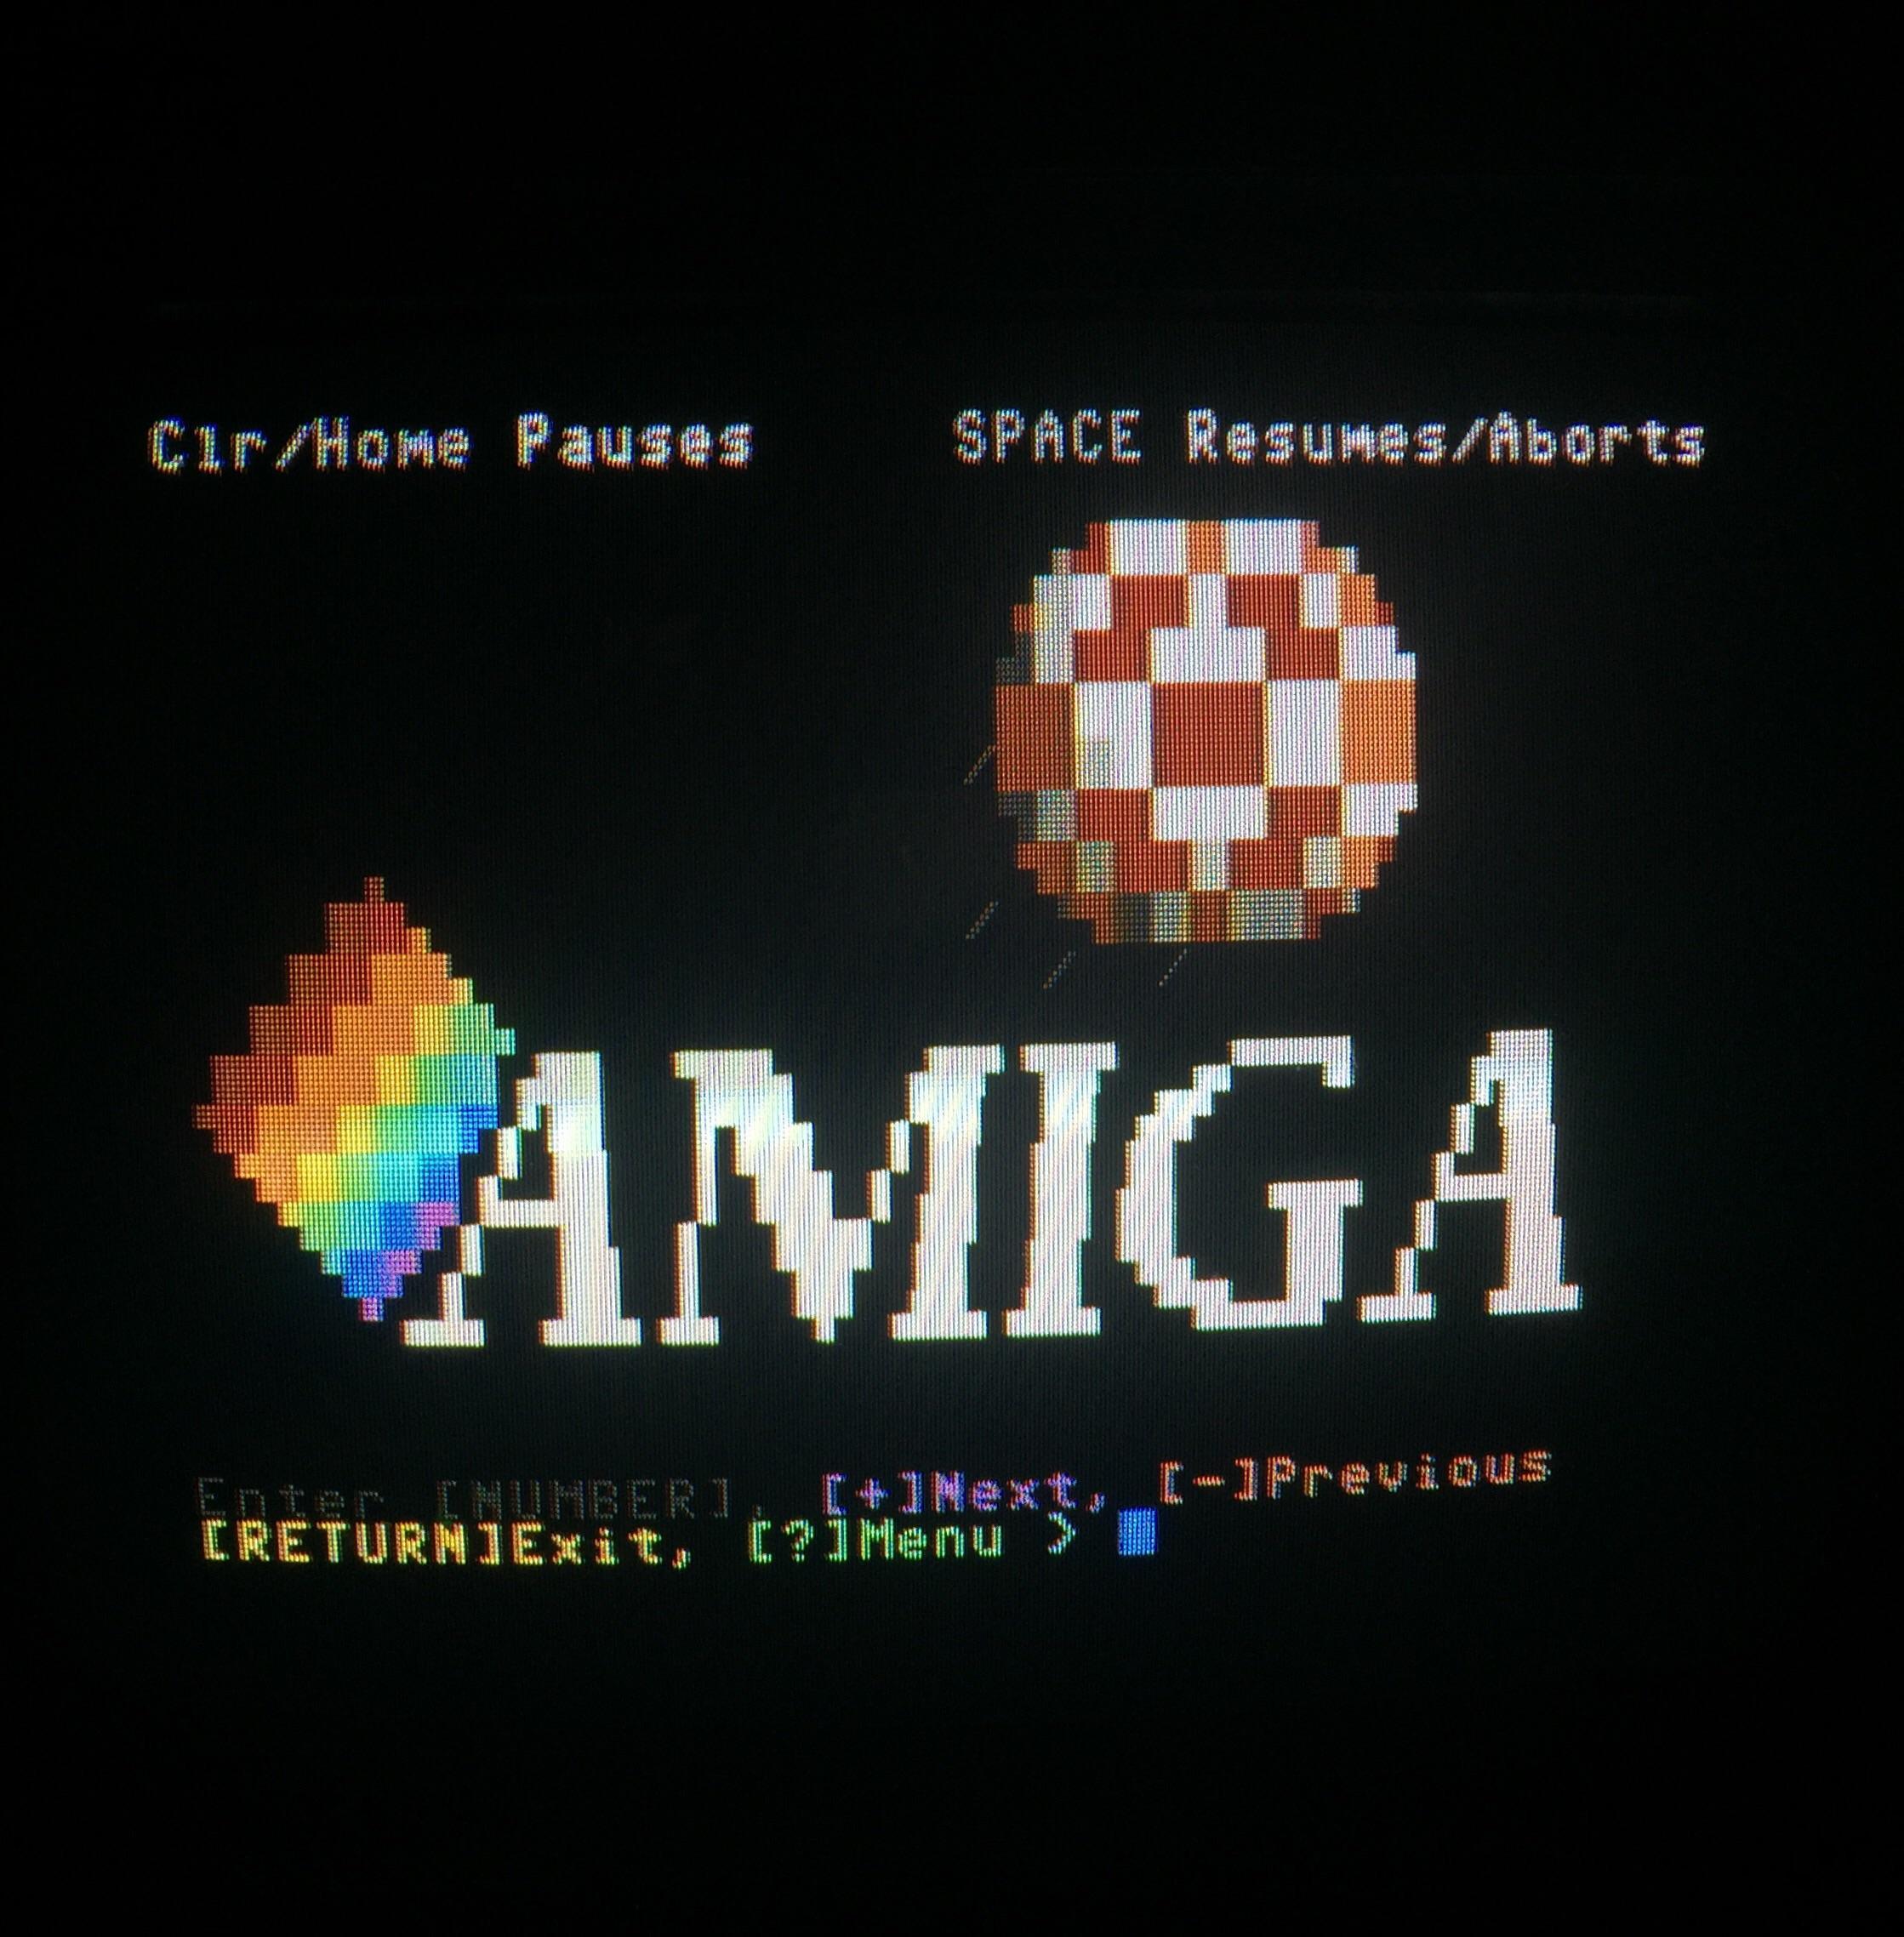 Amiga Logo - Awesome PETSCII art of the Amiga logo I found on C64 BBS 'Afterlife ...